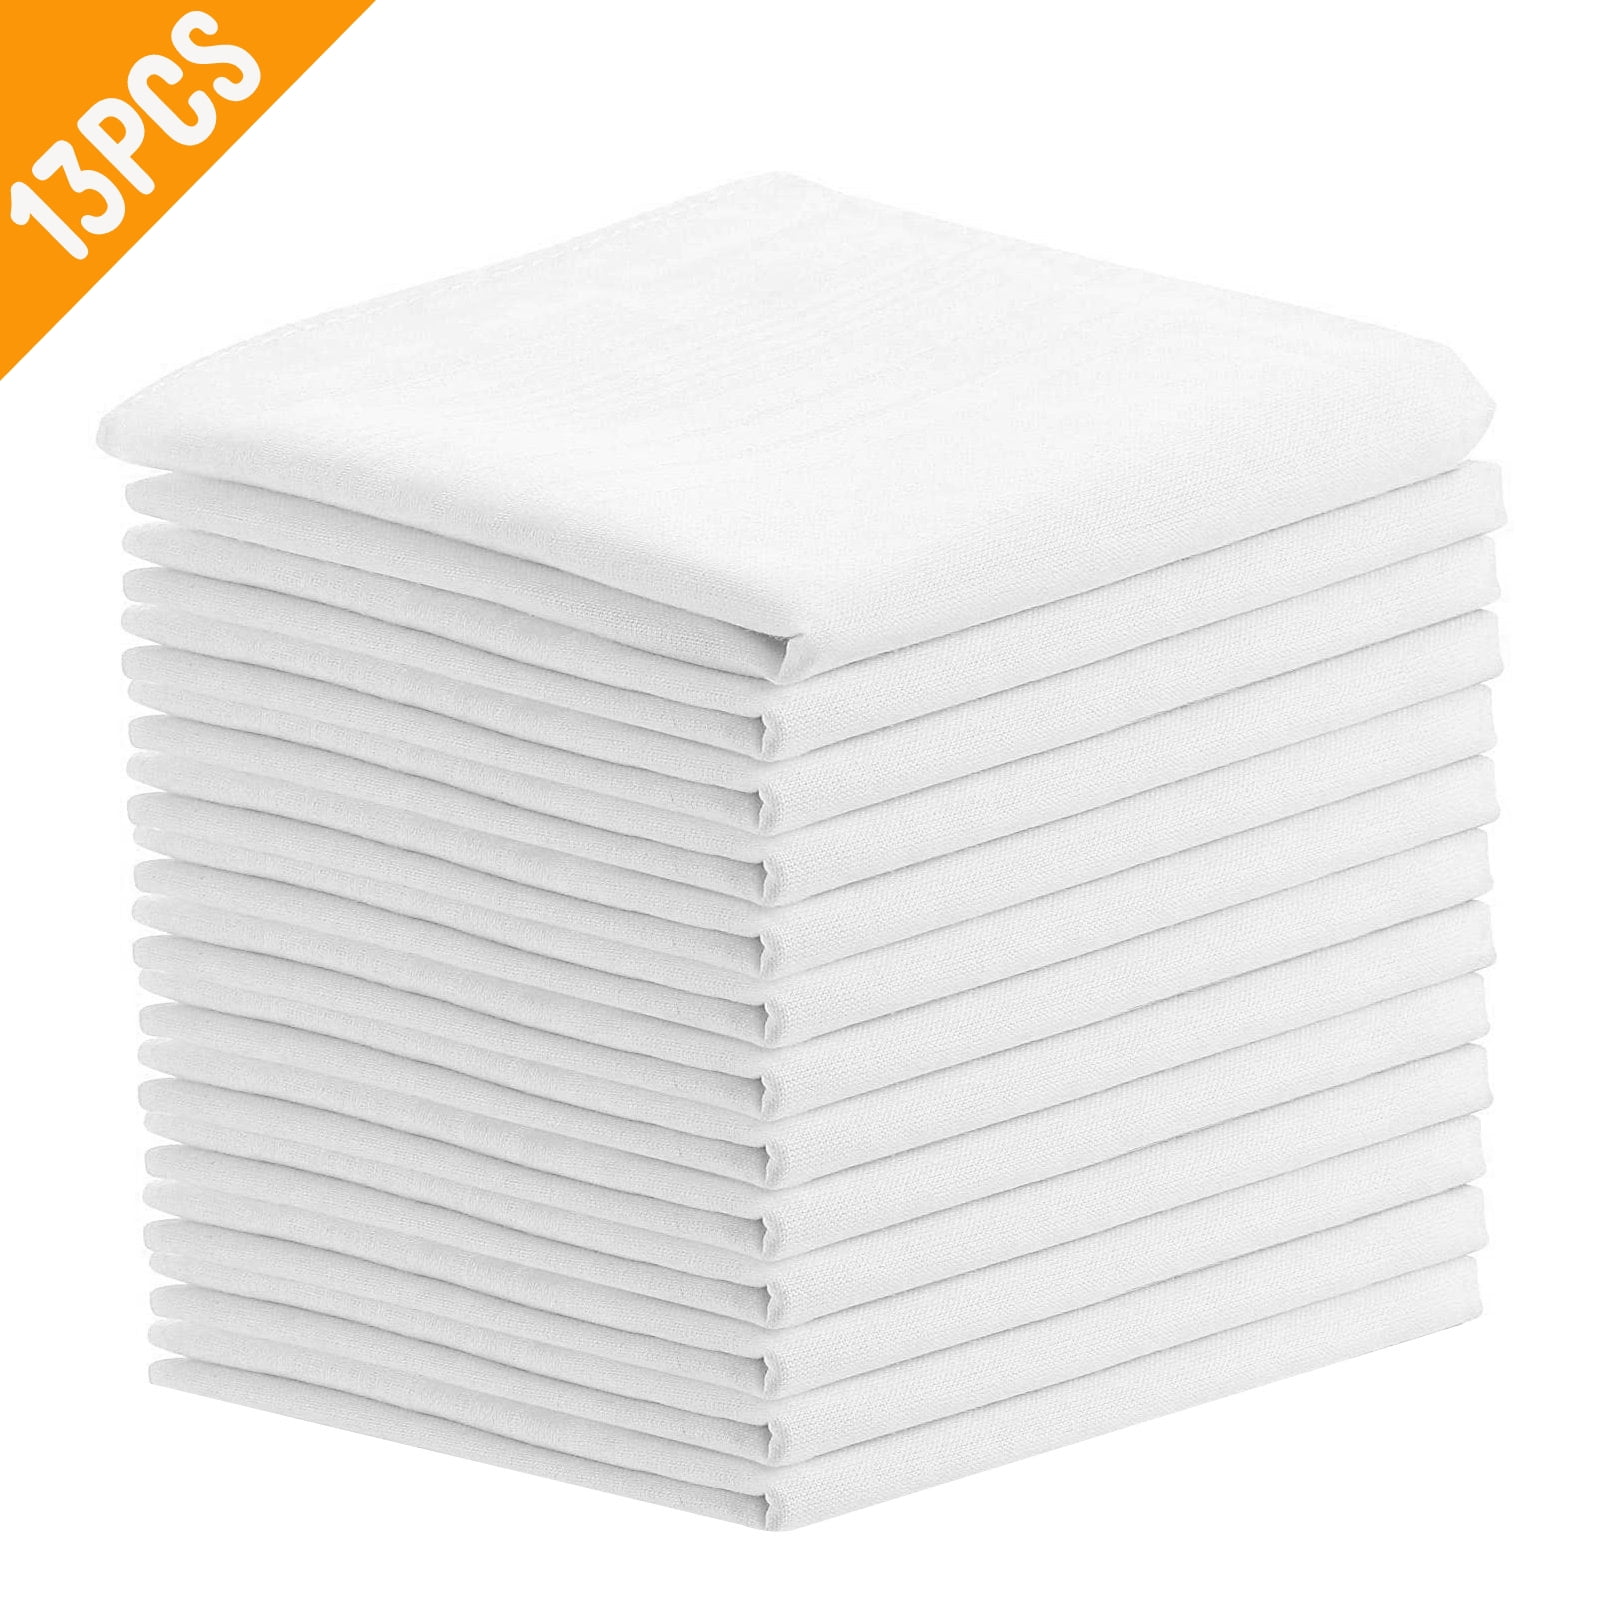 Mens Quality 12 Pack Plain White Handkerchiefs With Satin Borders 100%Cotton 